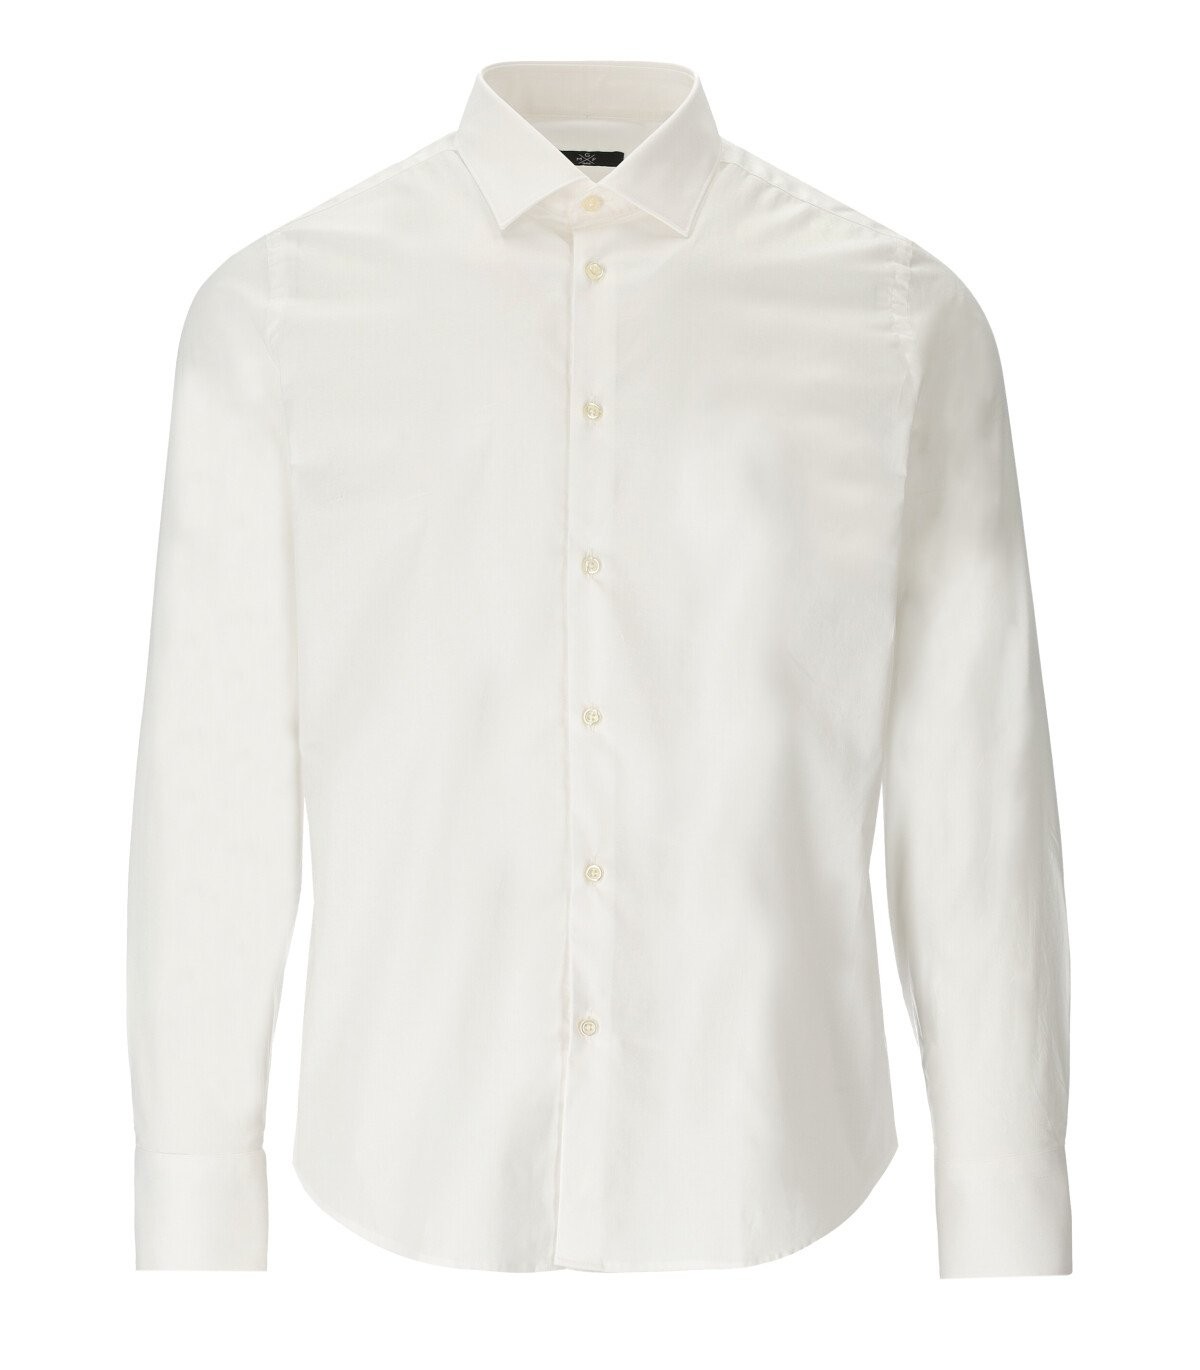 Gmf 965 White Poplin Shirt